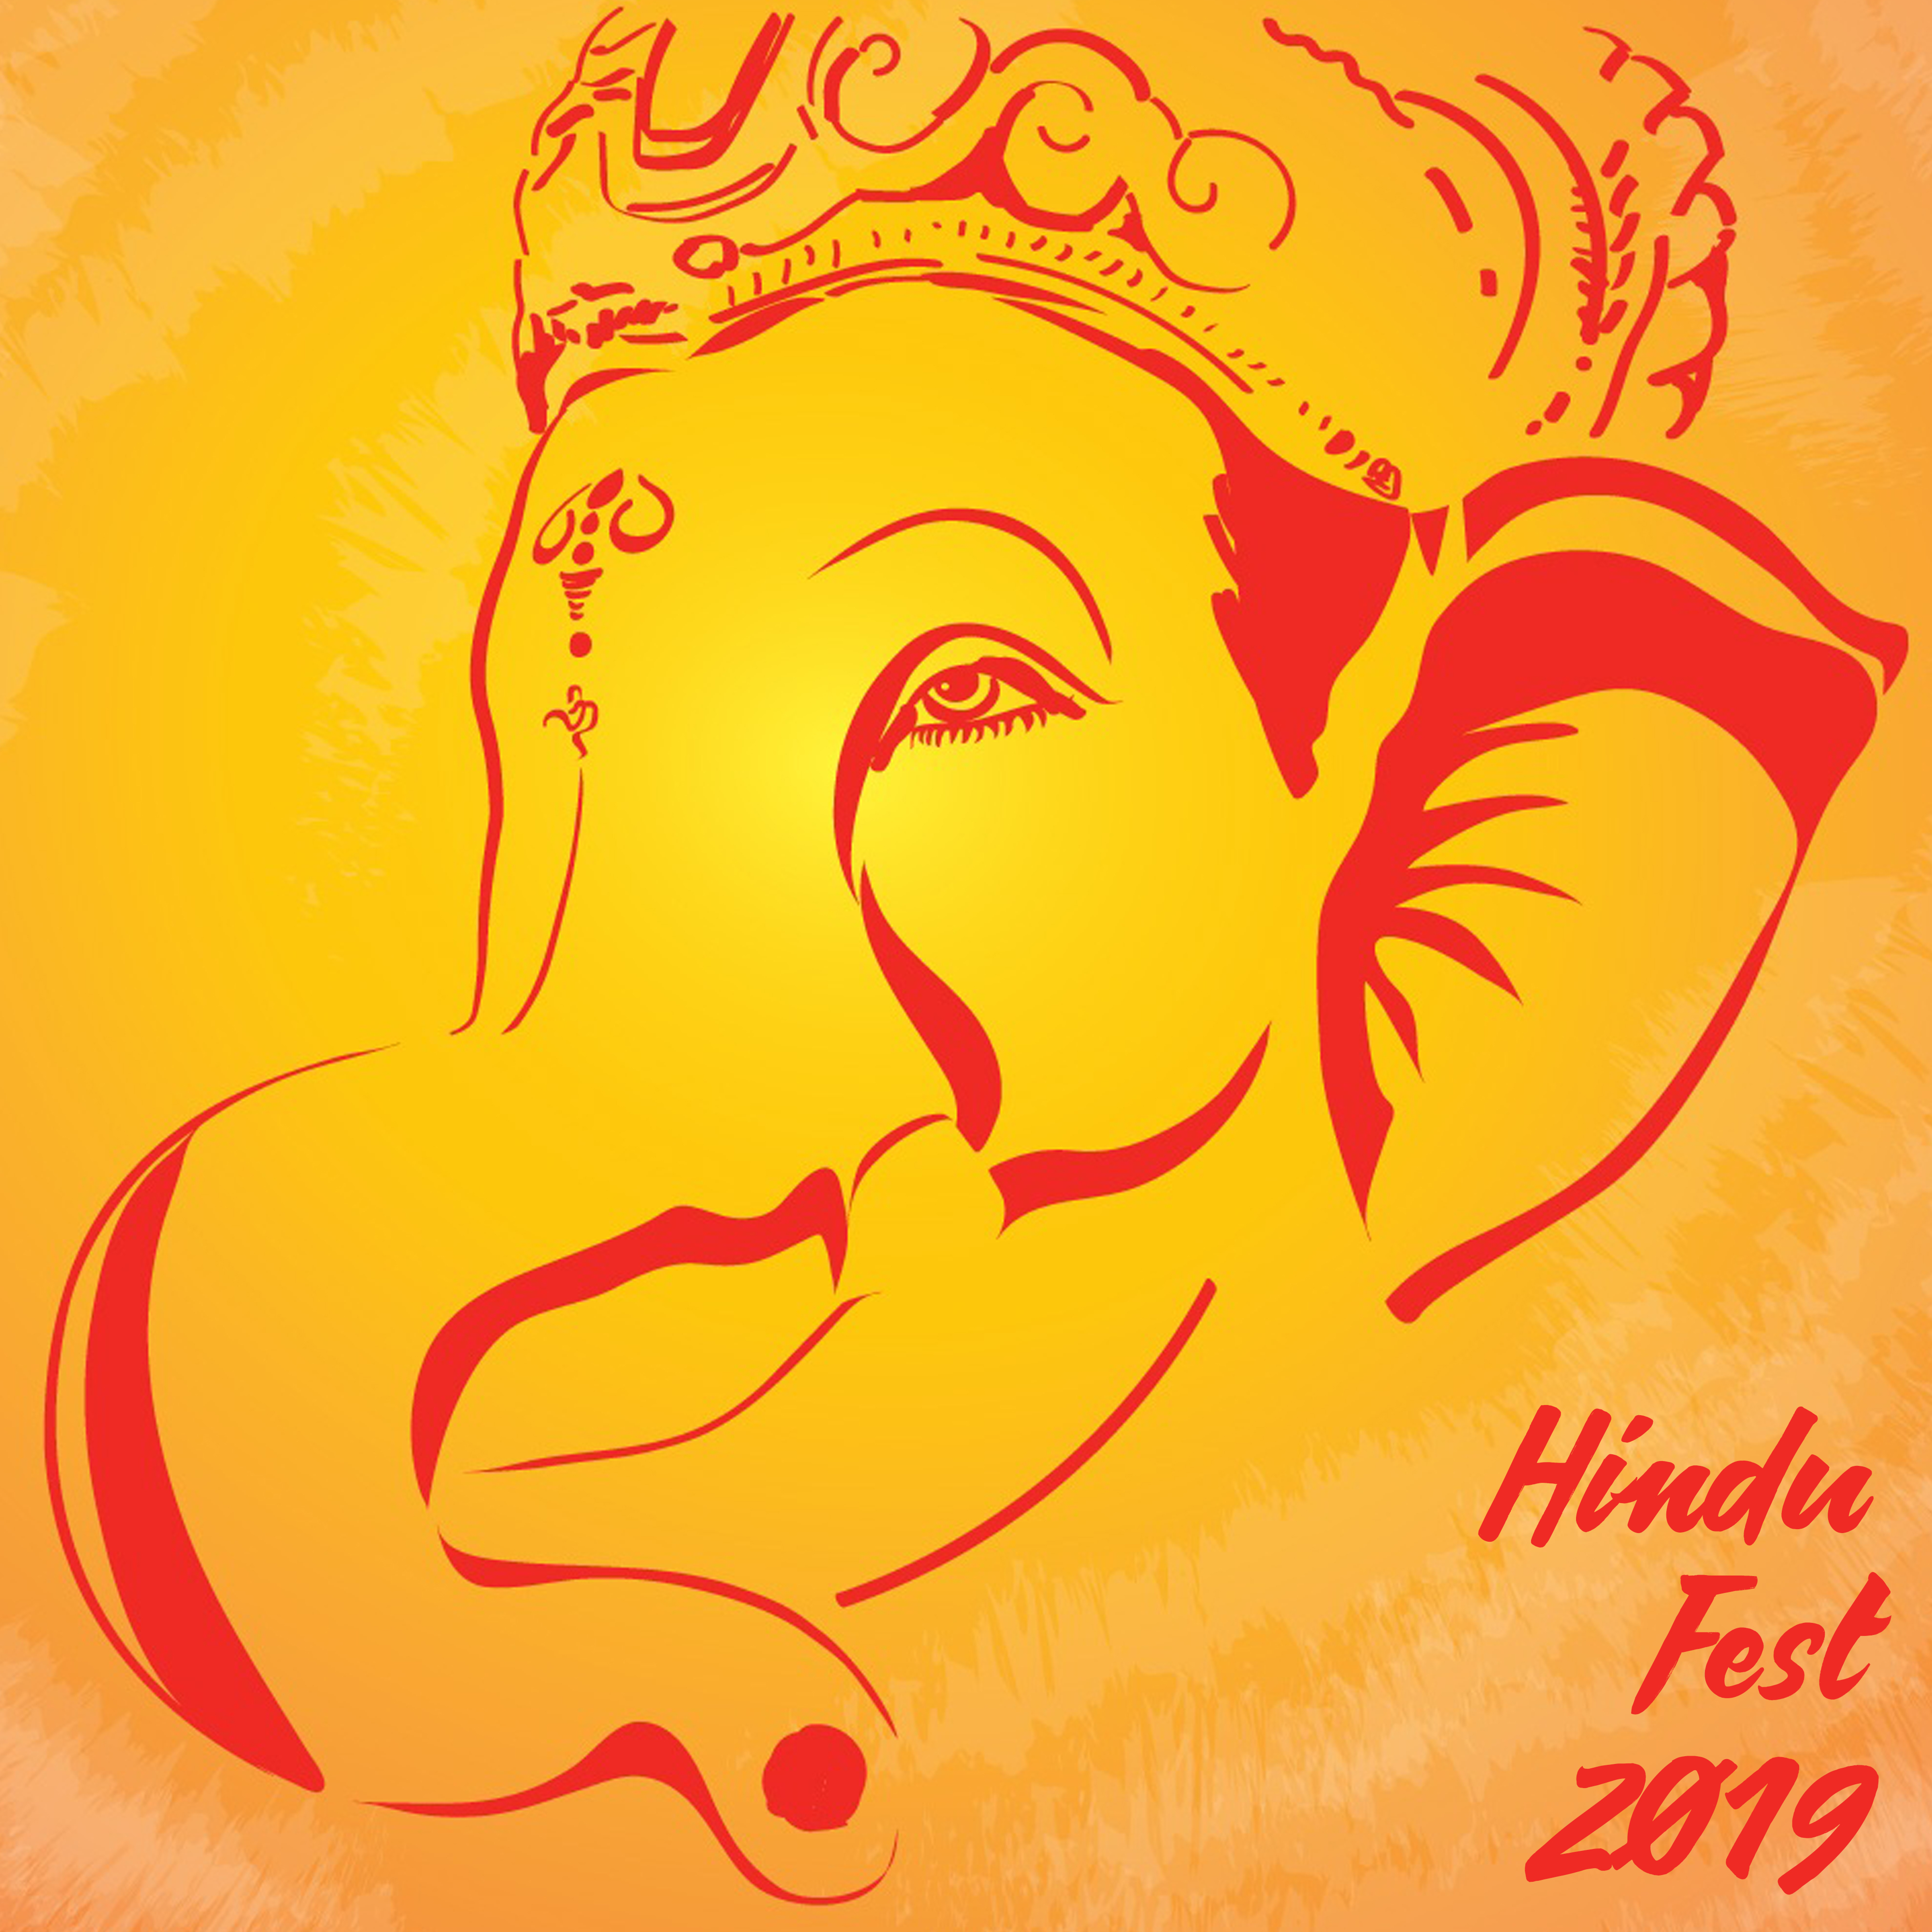 Hindu Fest 2019